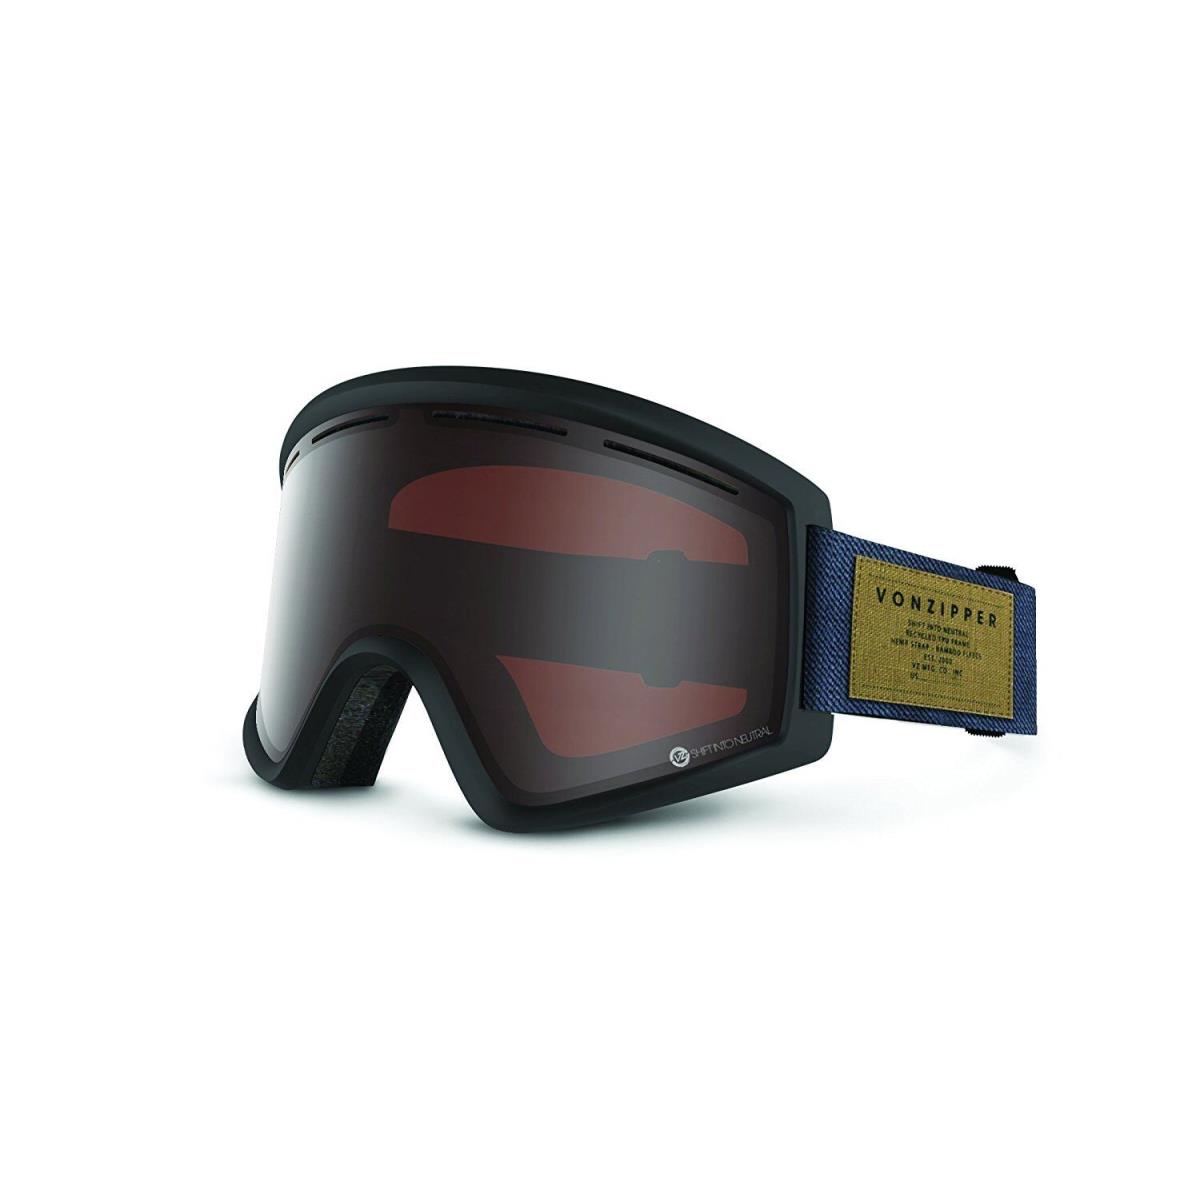 Vonzipper Cleaver Adult Ski / Snowboard Goggles Multiple Colors Sin Charcoal Satin/Persimmon Chrome